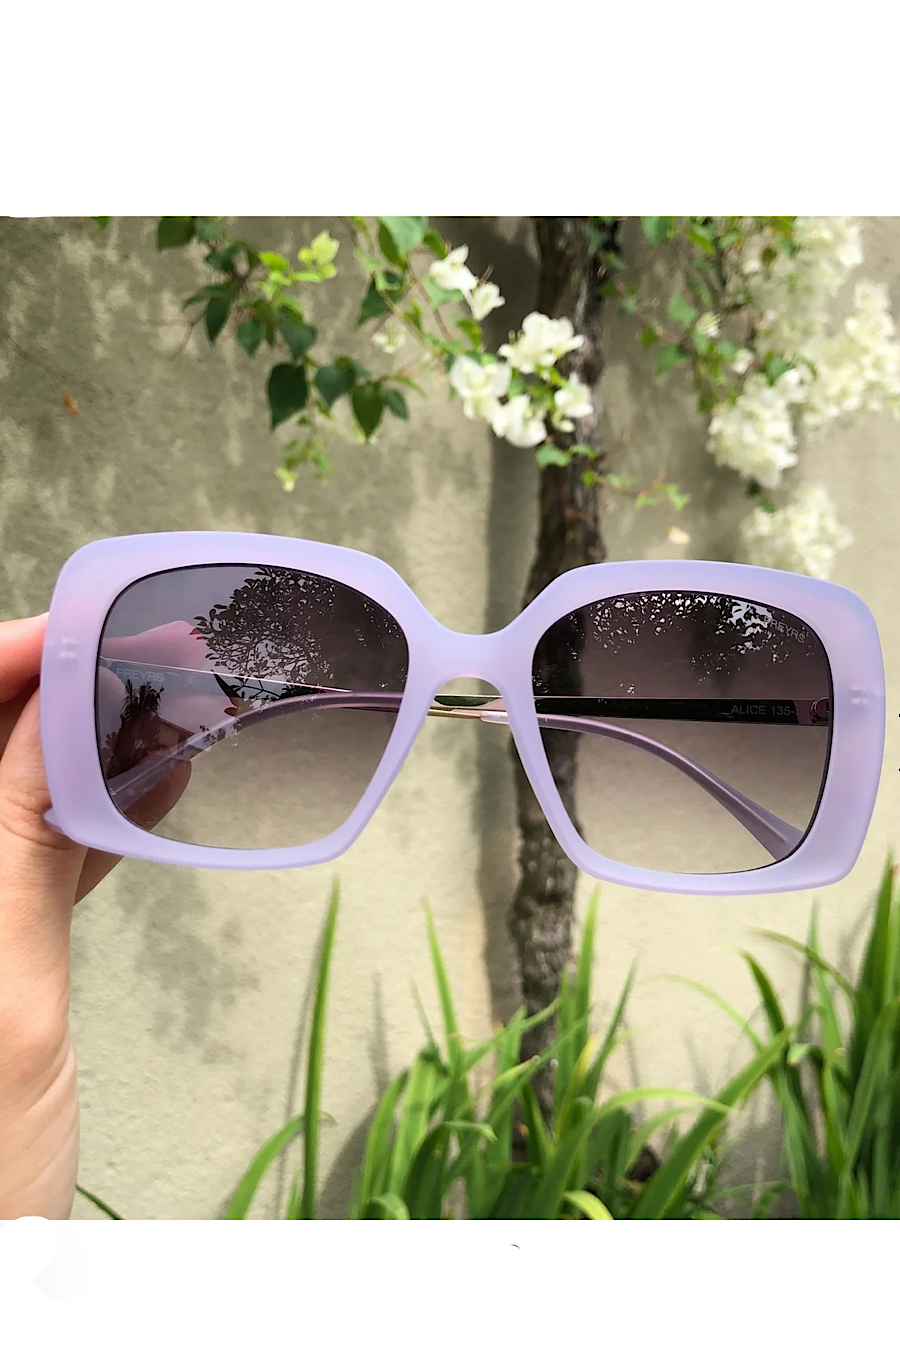 Freyrs Alice Sunglasses Lavender